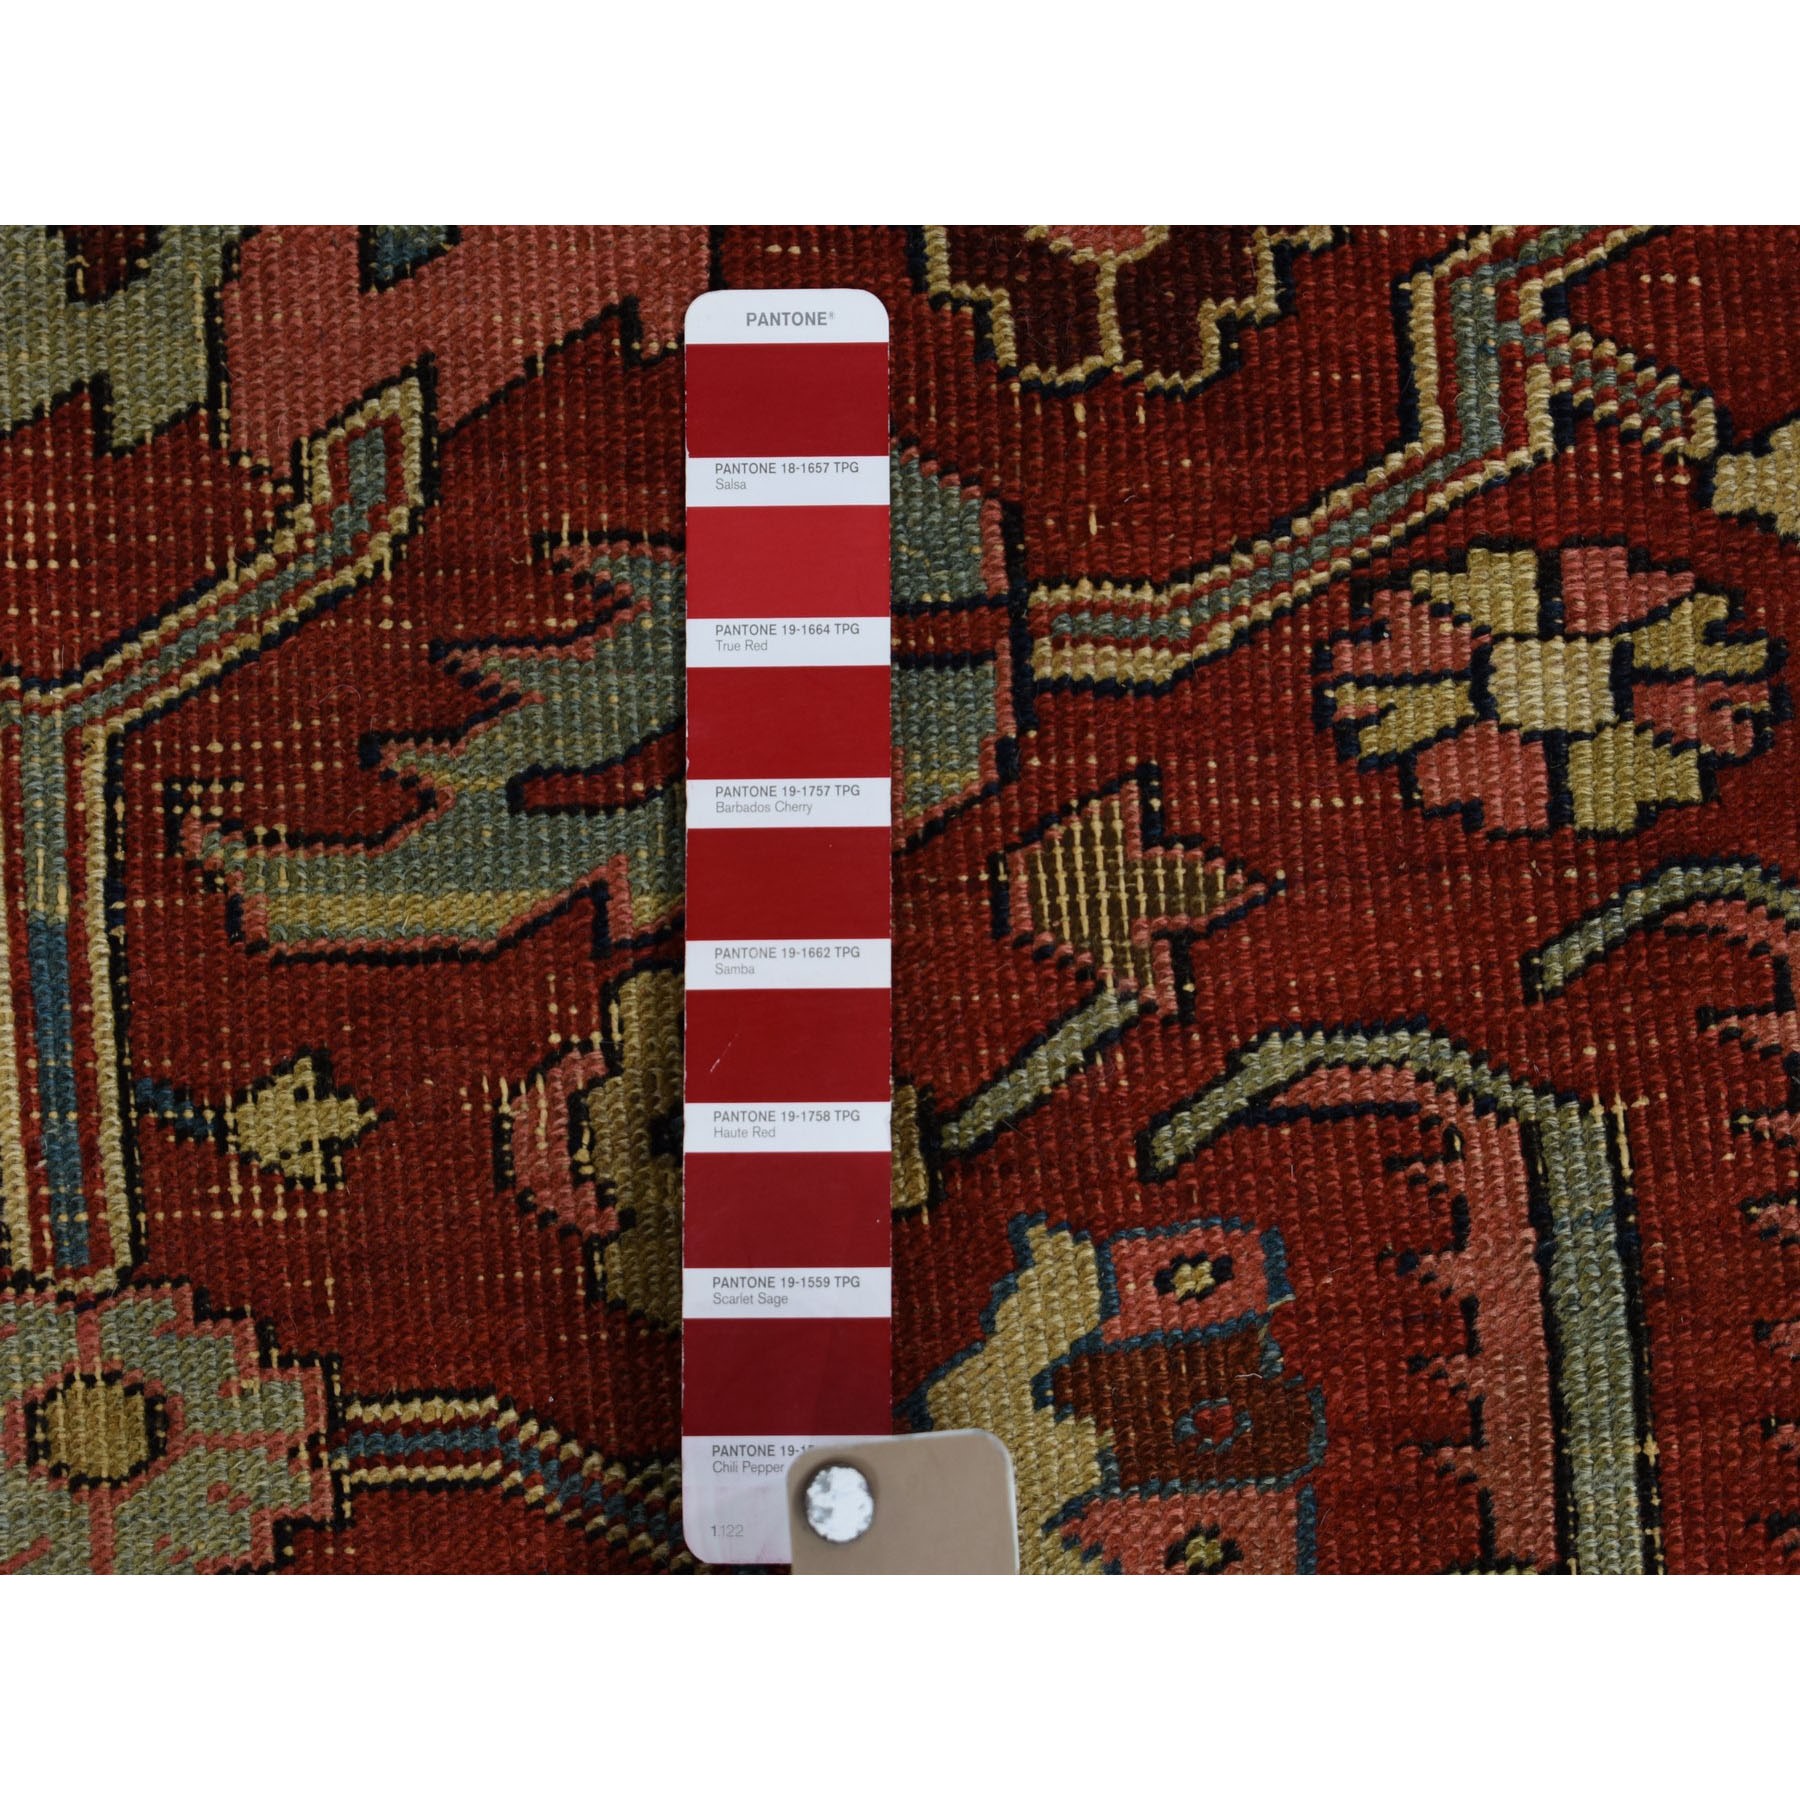 12'1"x19'5" Large Size Original Antique Persian Serapi Heriz Some Wear Clean Hand Woven Oriental Rug 